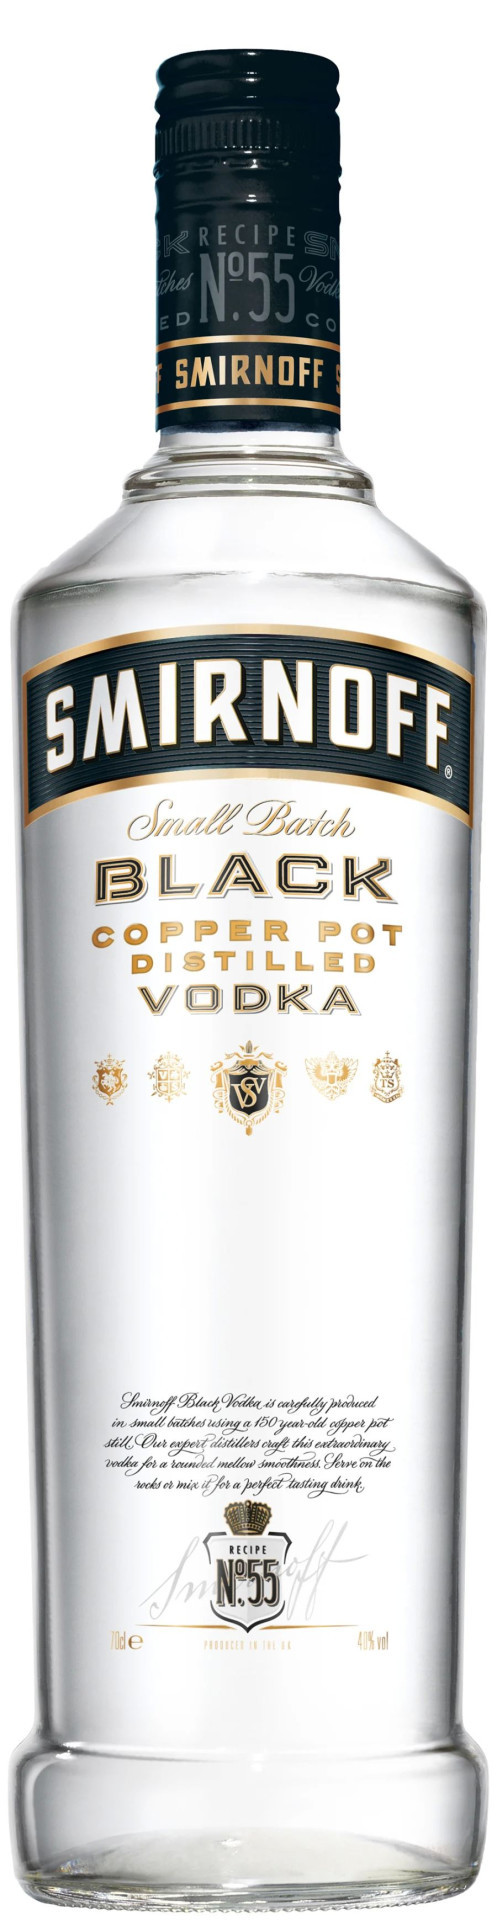 Smirnoff Black Vodka 0.7l